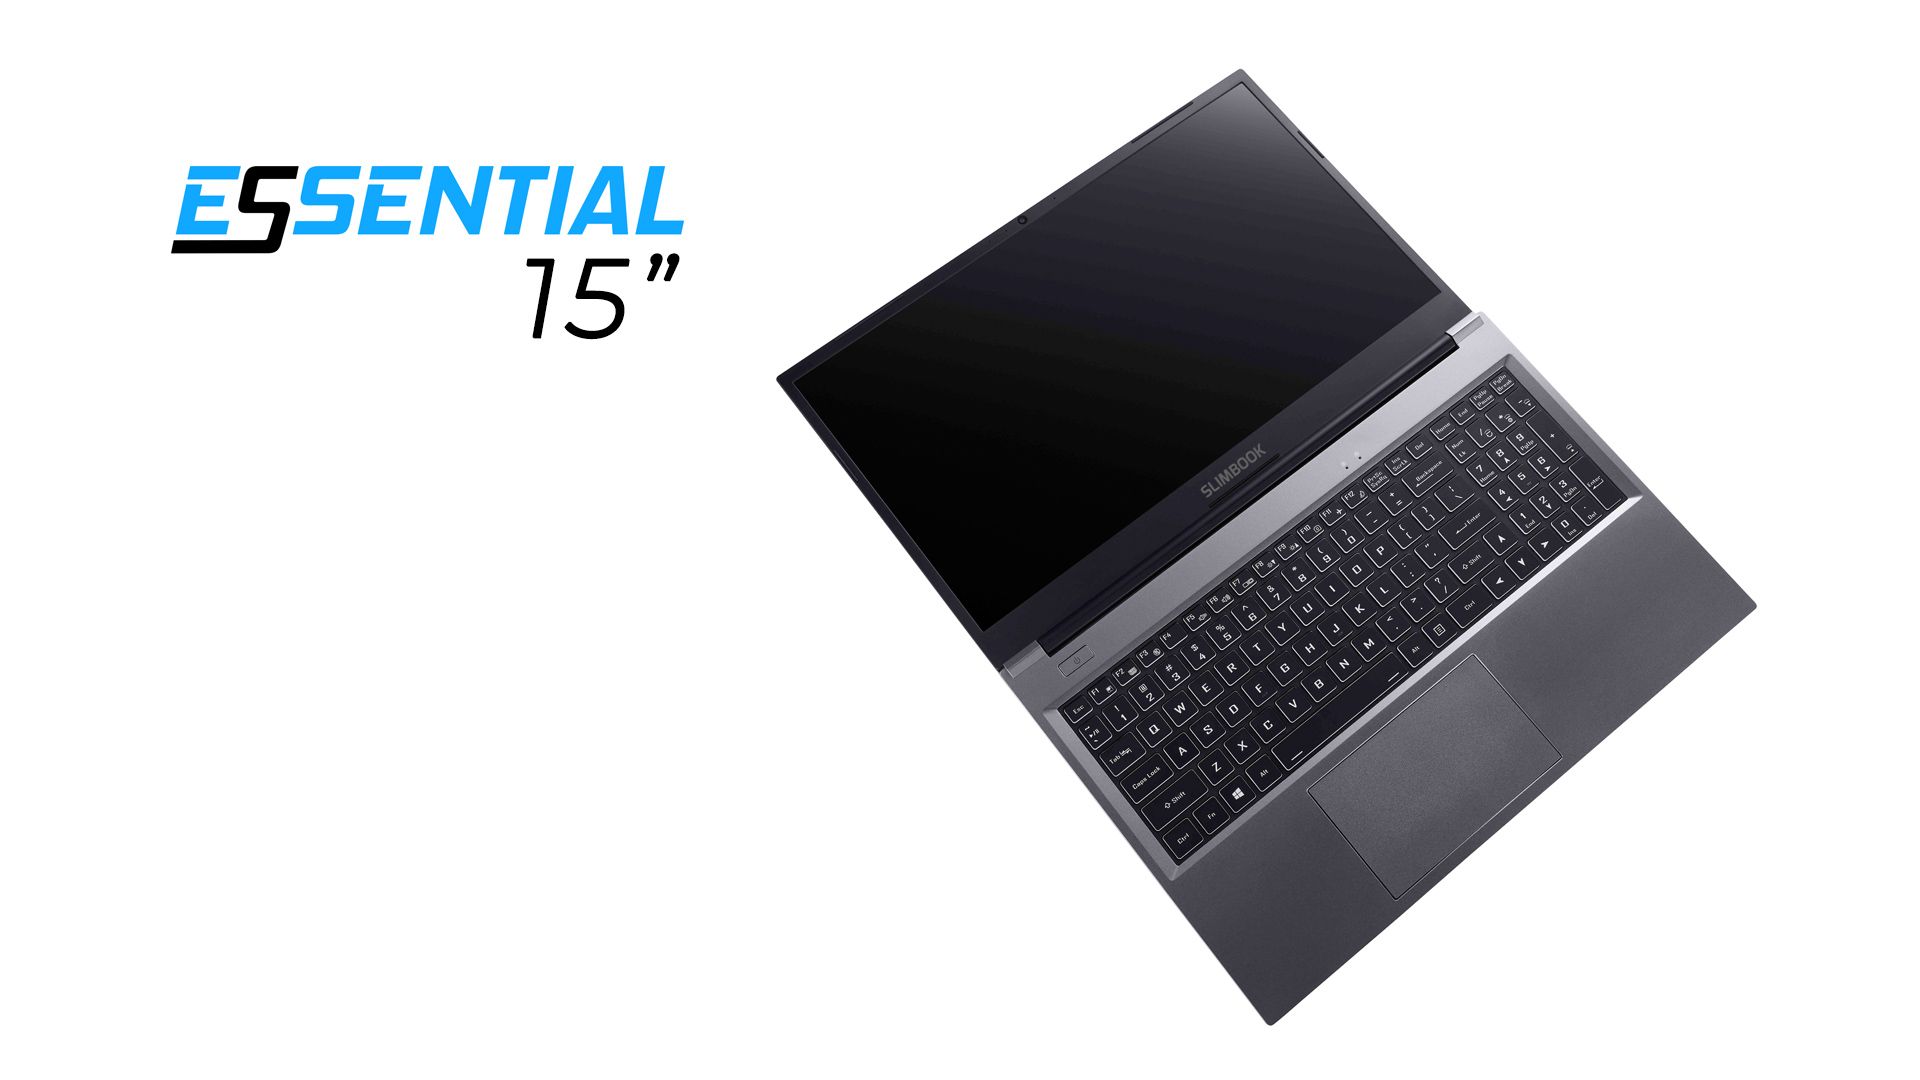 Essential 15 Linux laptop by Slimbook